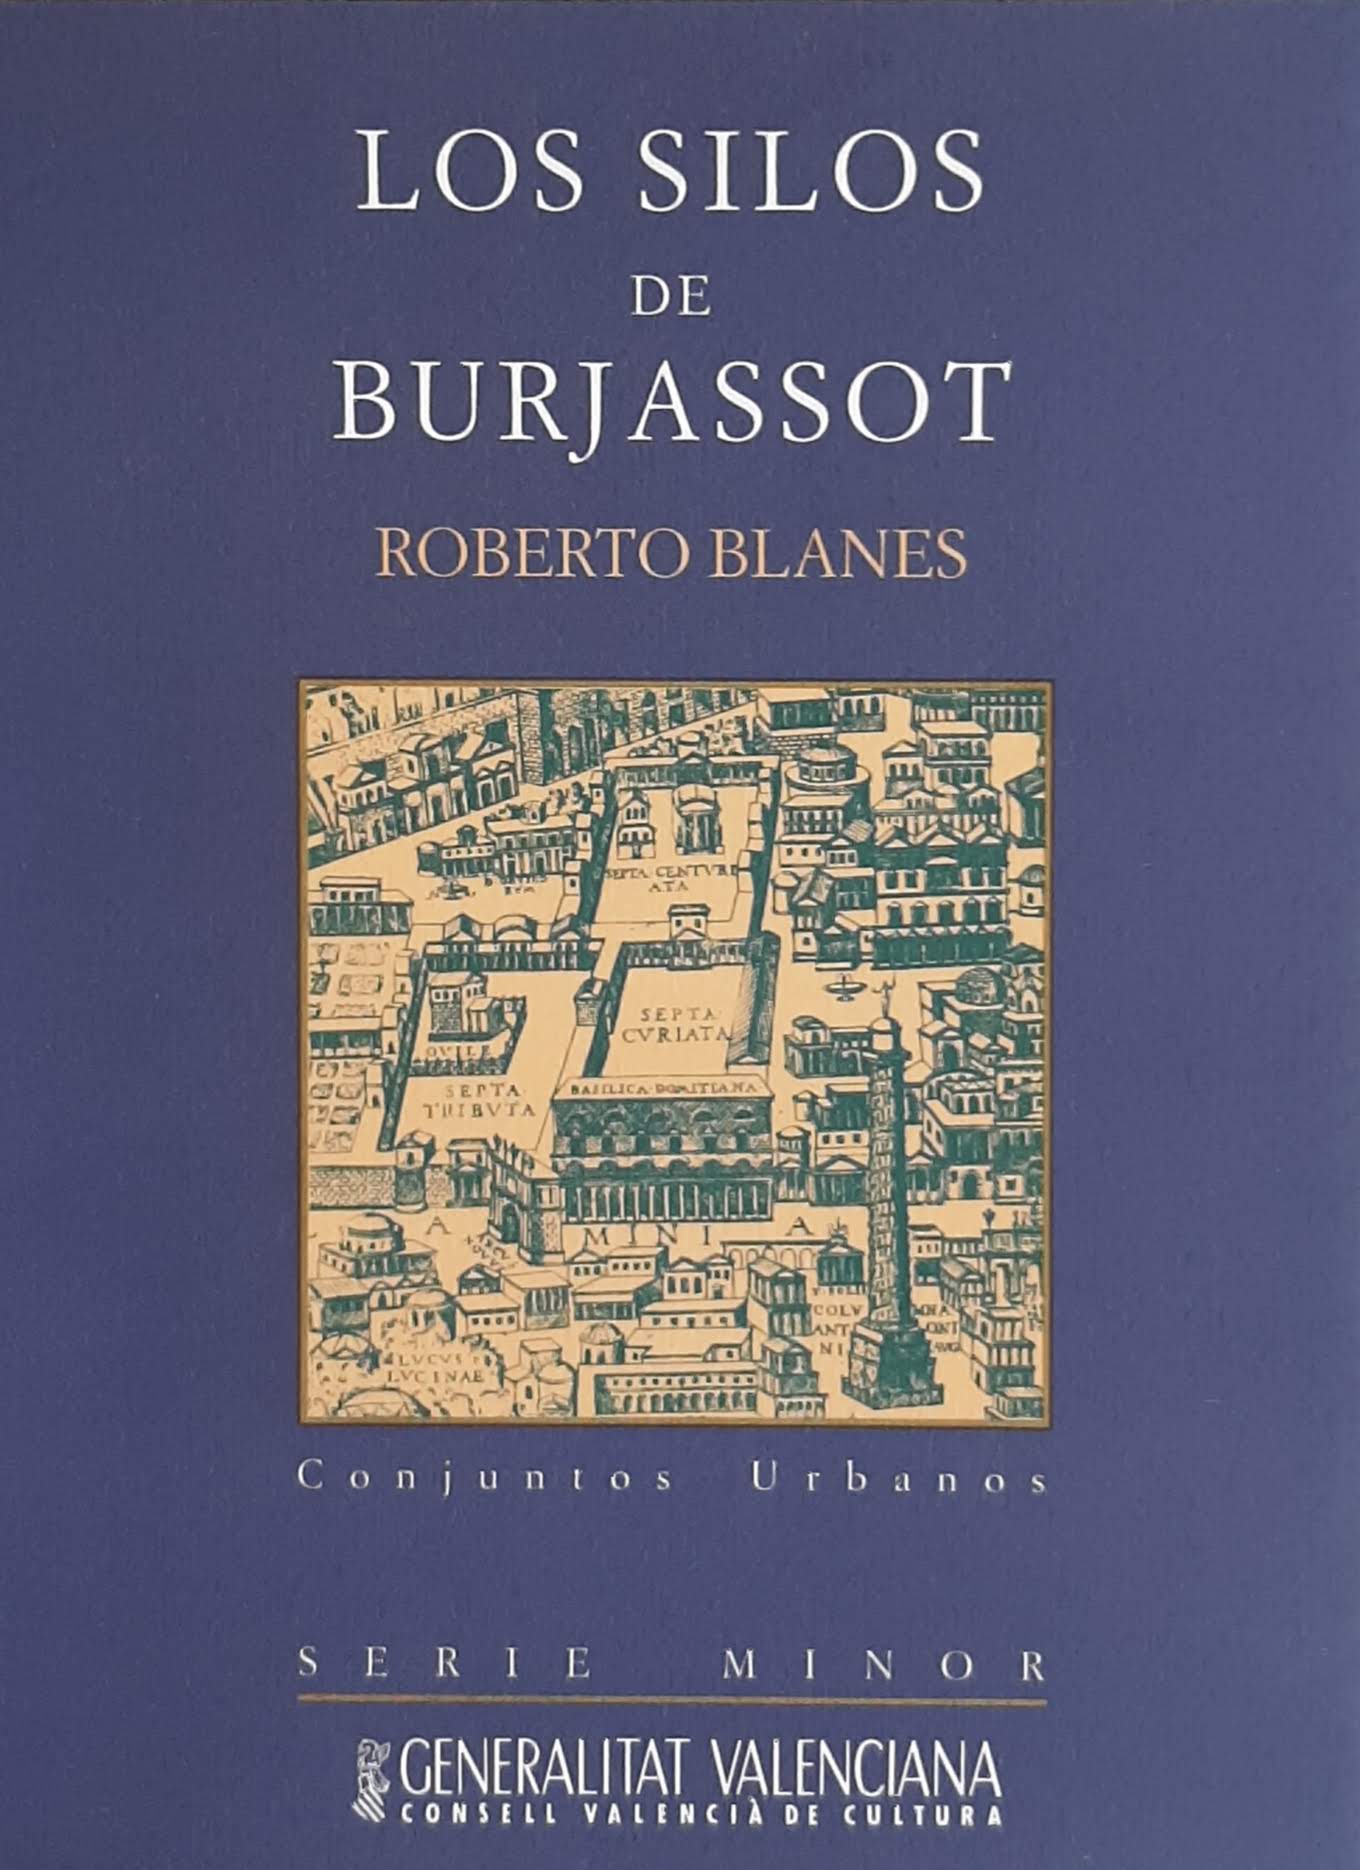 Los silos de Burjassot (1573-1600). Nº 11. Serie Minor